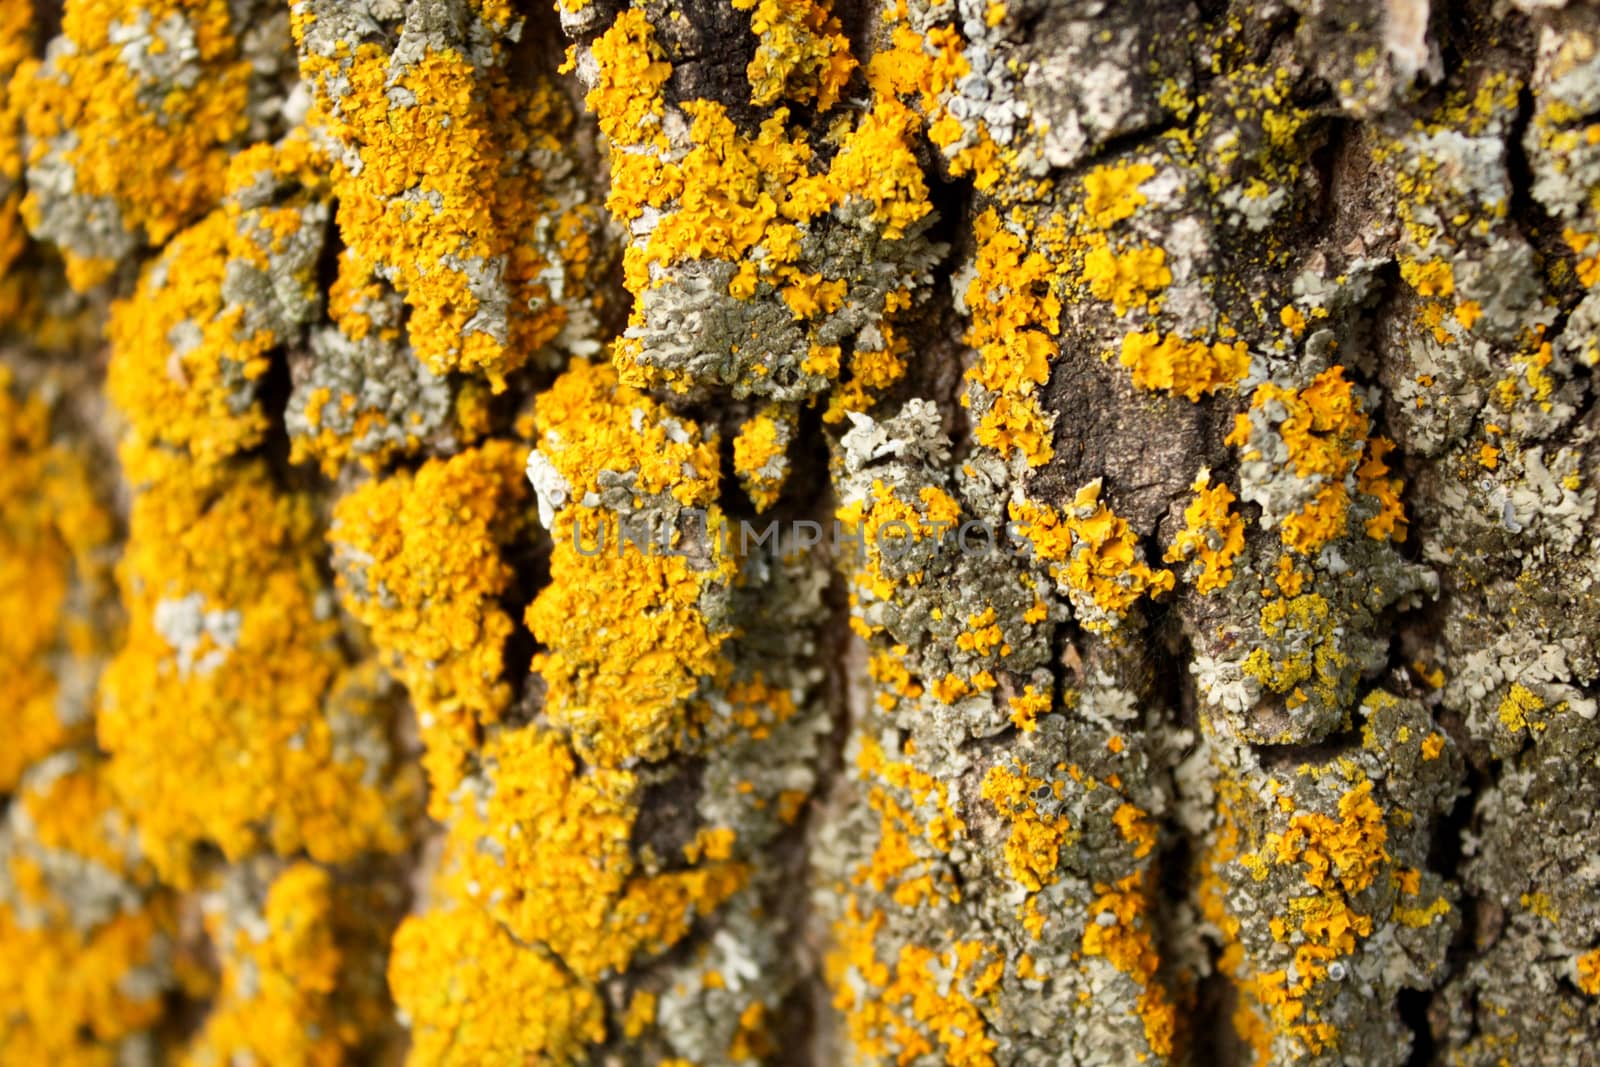 Yellow lichen on a bark